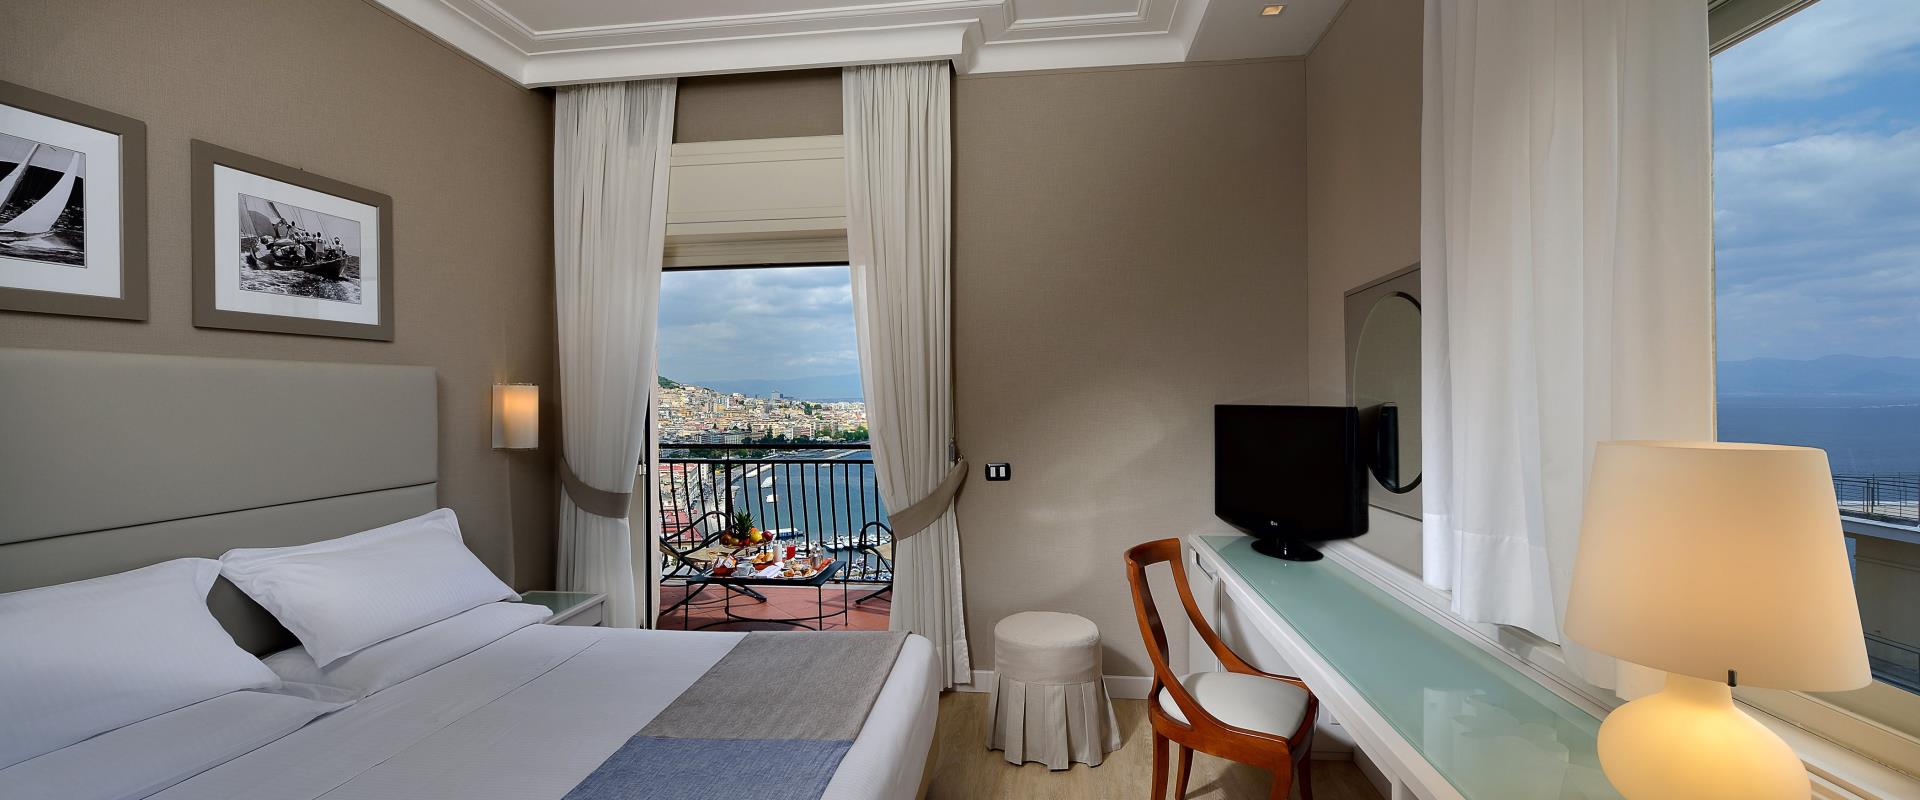 Doppelzimmer mit Meerblick über dem Golf von Neapel - Hotel Paradiso Neapel